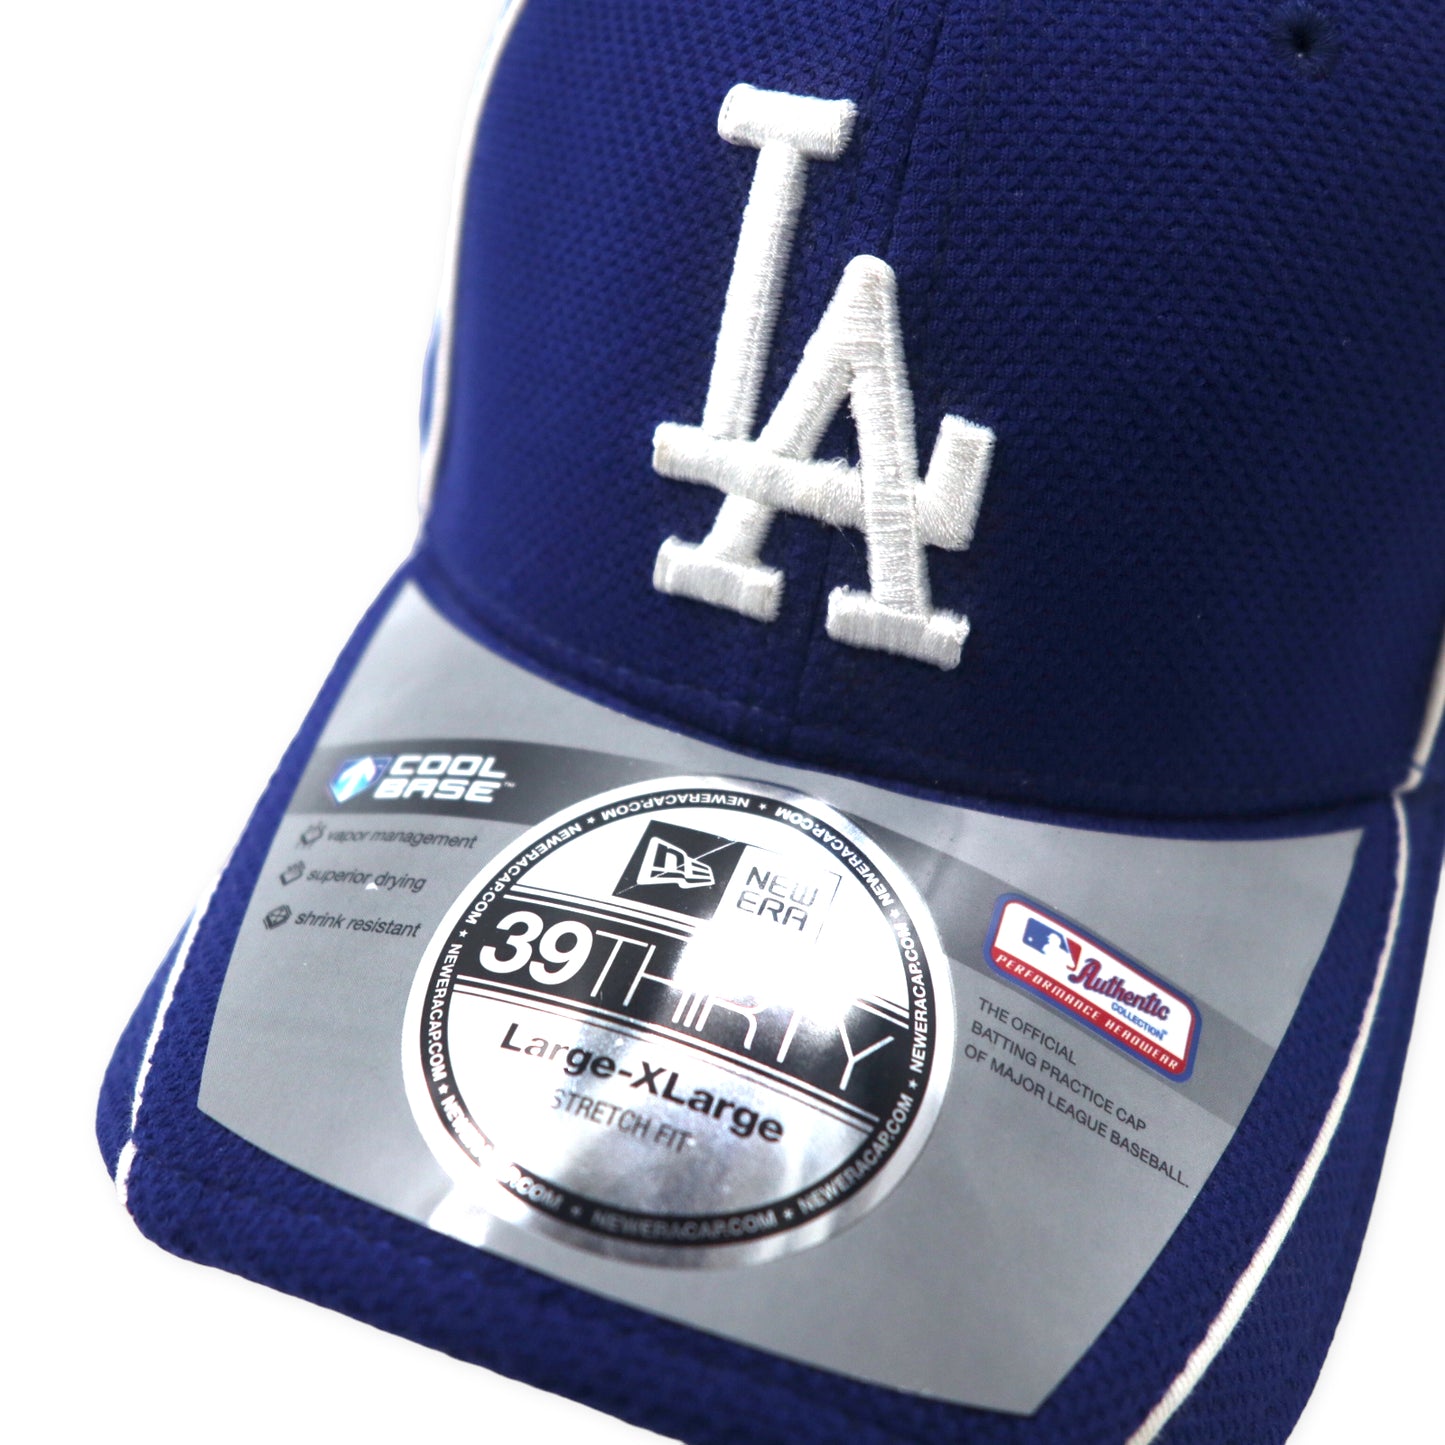 NEWERA ベースボールキャップ L/XL ブルー ストレッチフィット MLB Los Angeles Dodgers ロサンゼルス ドジャース 未使用品